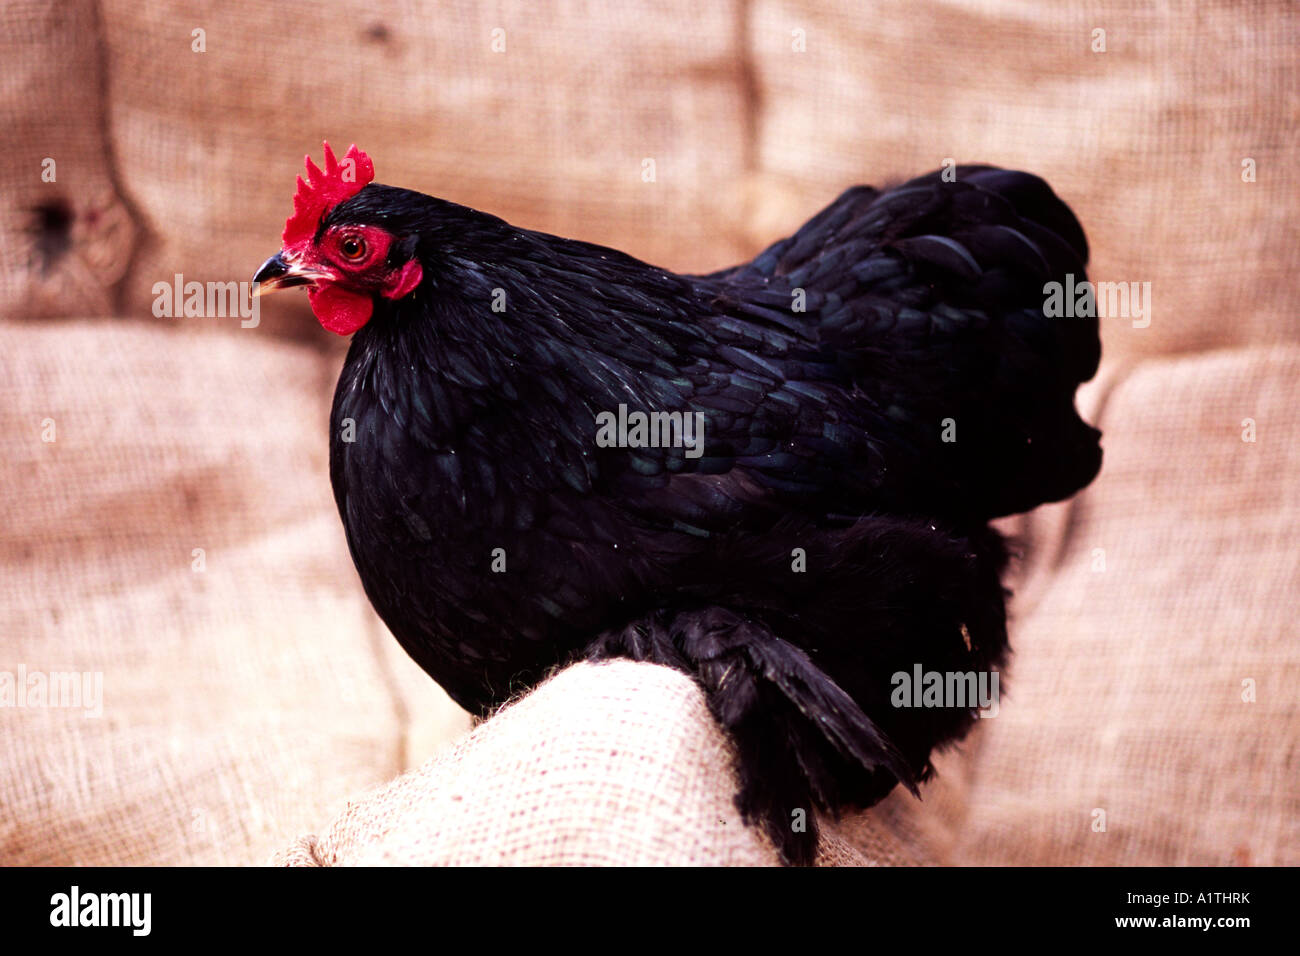 Black Pekin bantam hen. A typical backyard small chicken breed. Stock Photo